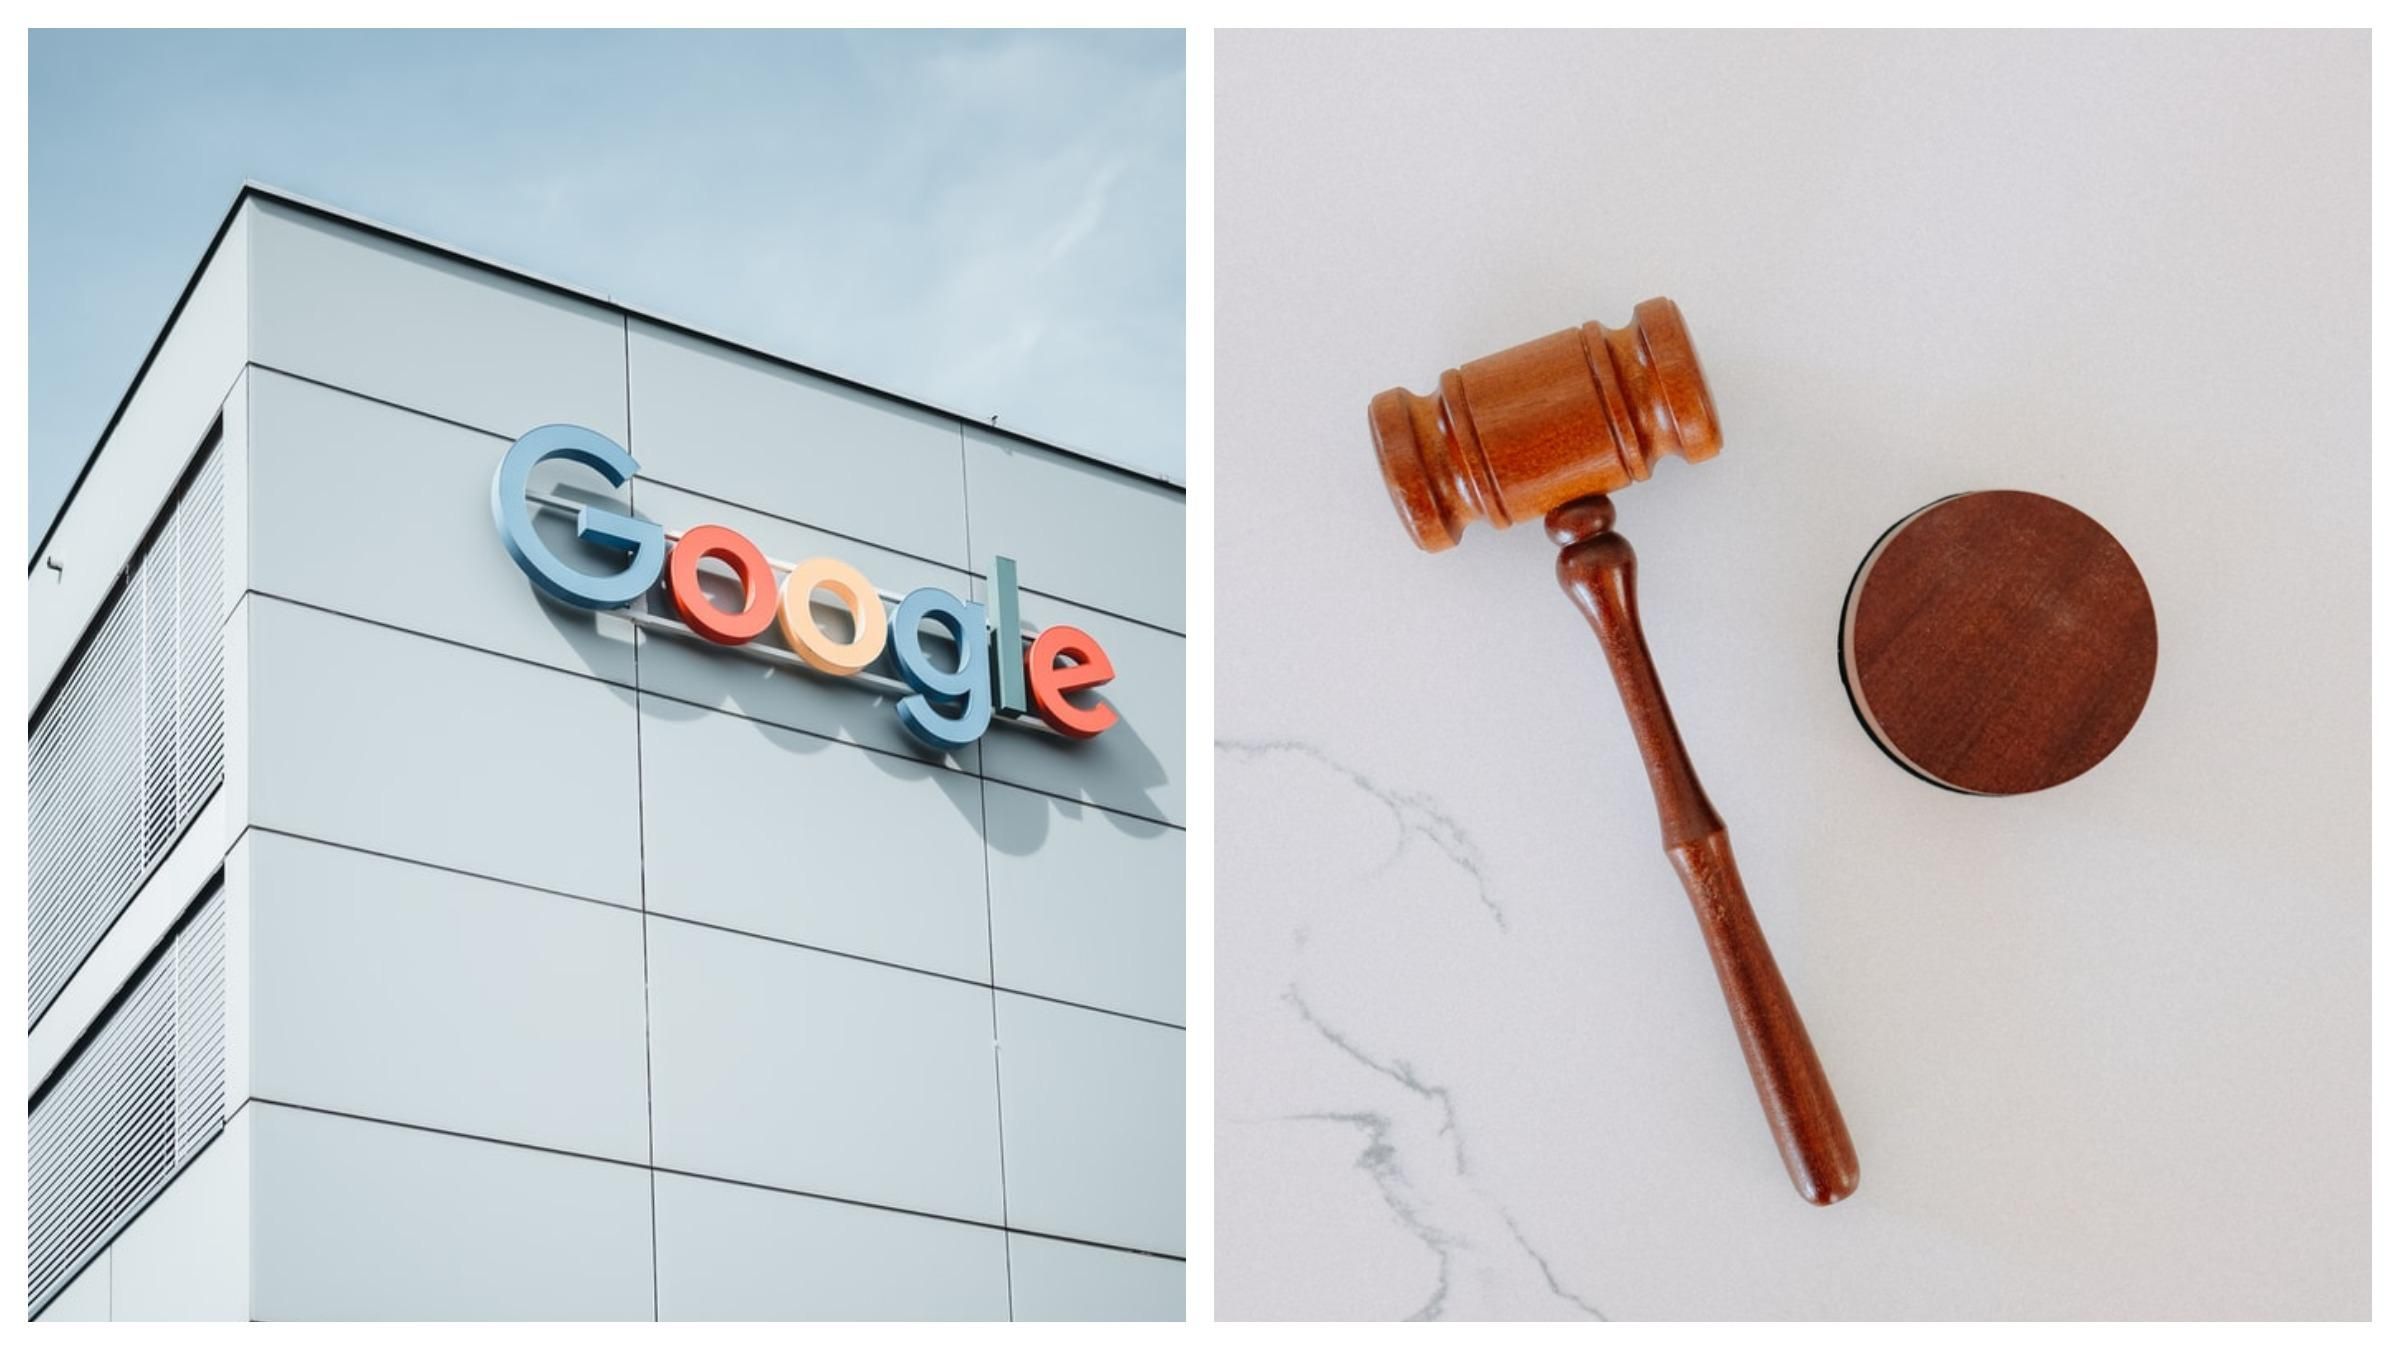 Евросоюз оштрафует Google на 2,4 миллиарда евро: компания проиграла суд - Новости технологий - Техно